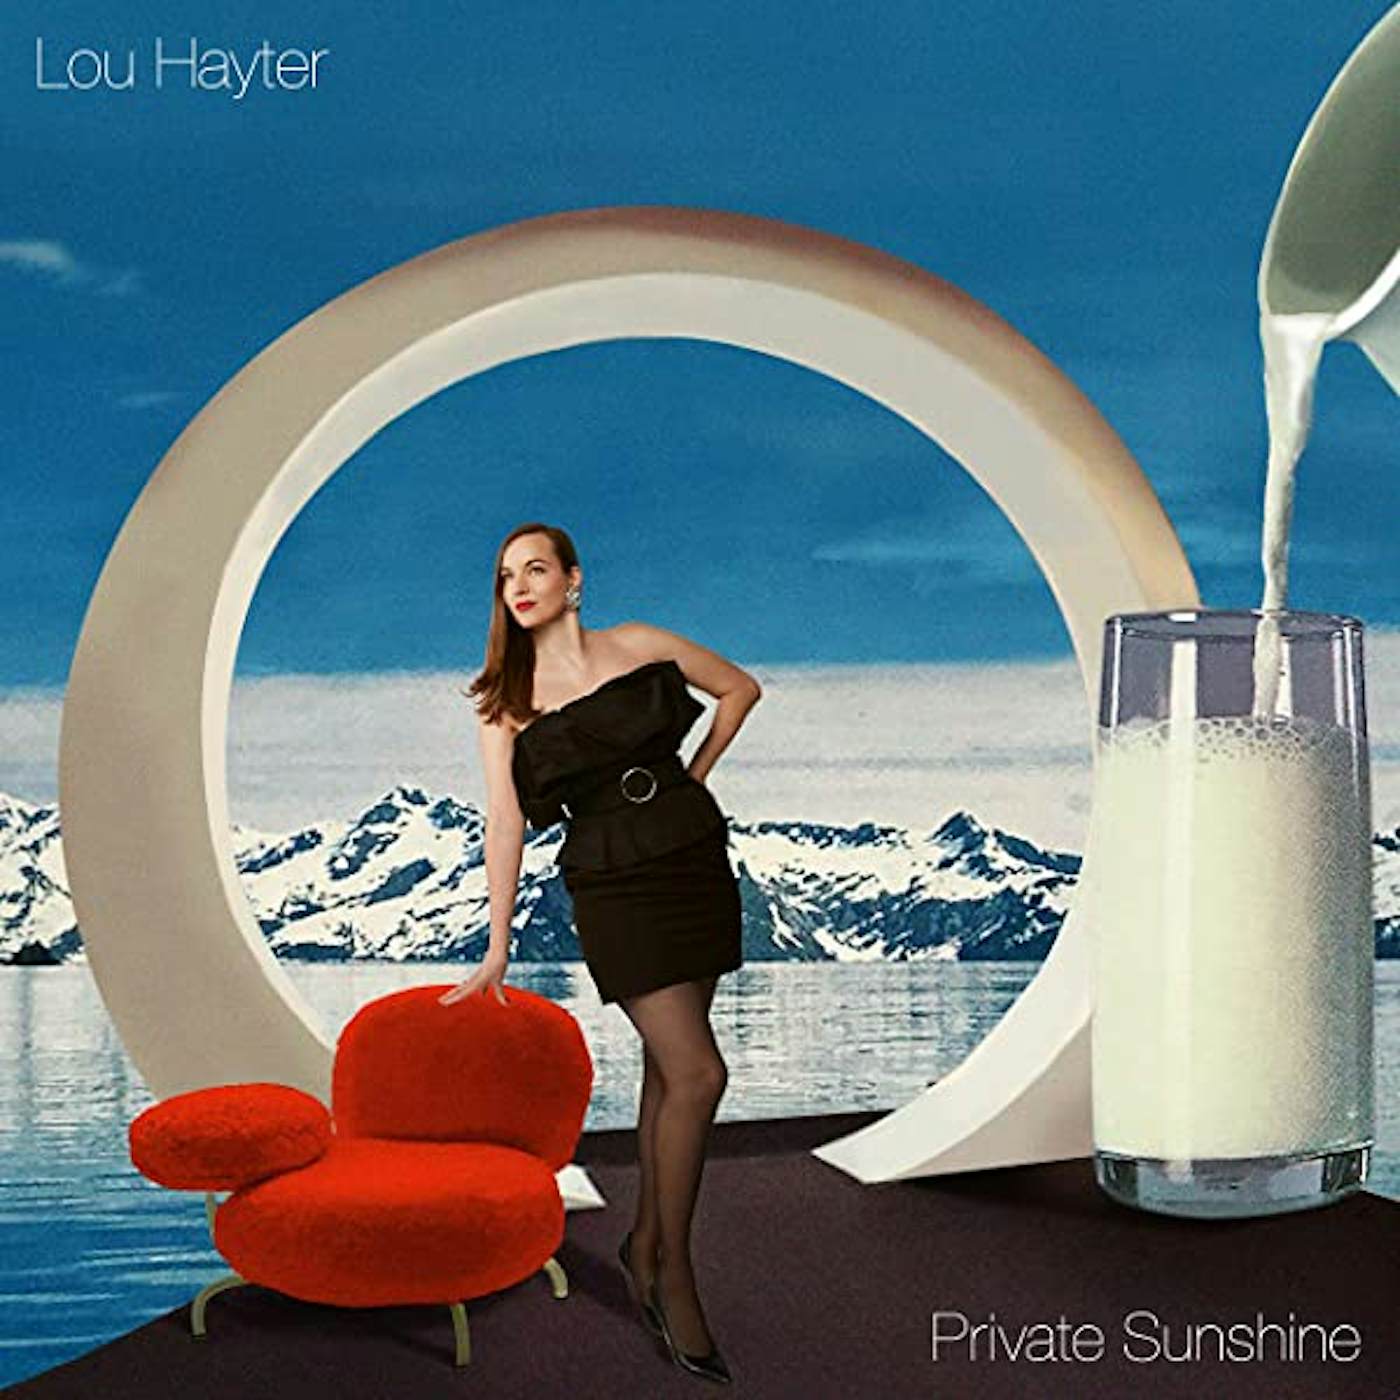 Lou Hayter Private Sunshine Vinyl Record